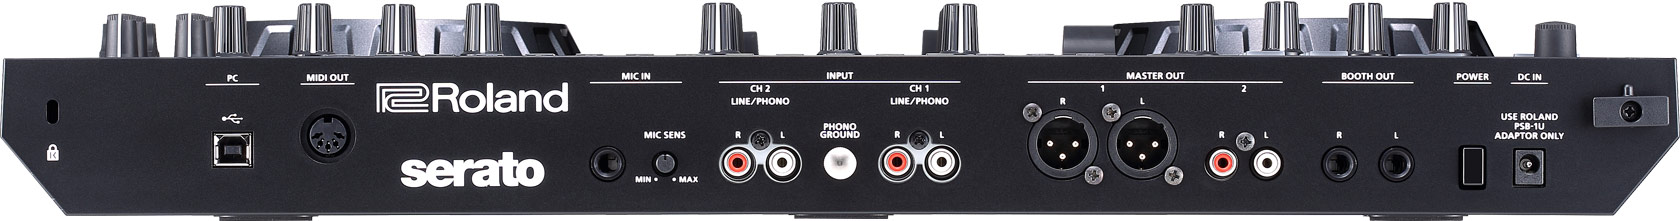 Roland Dj-505 - USB DJ controller - Variation 4